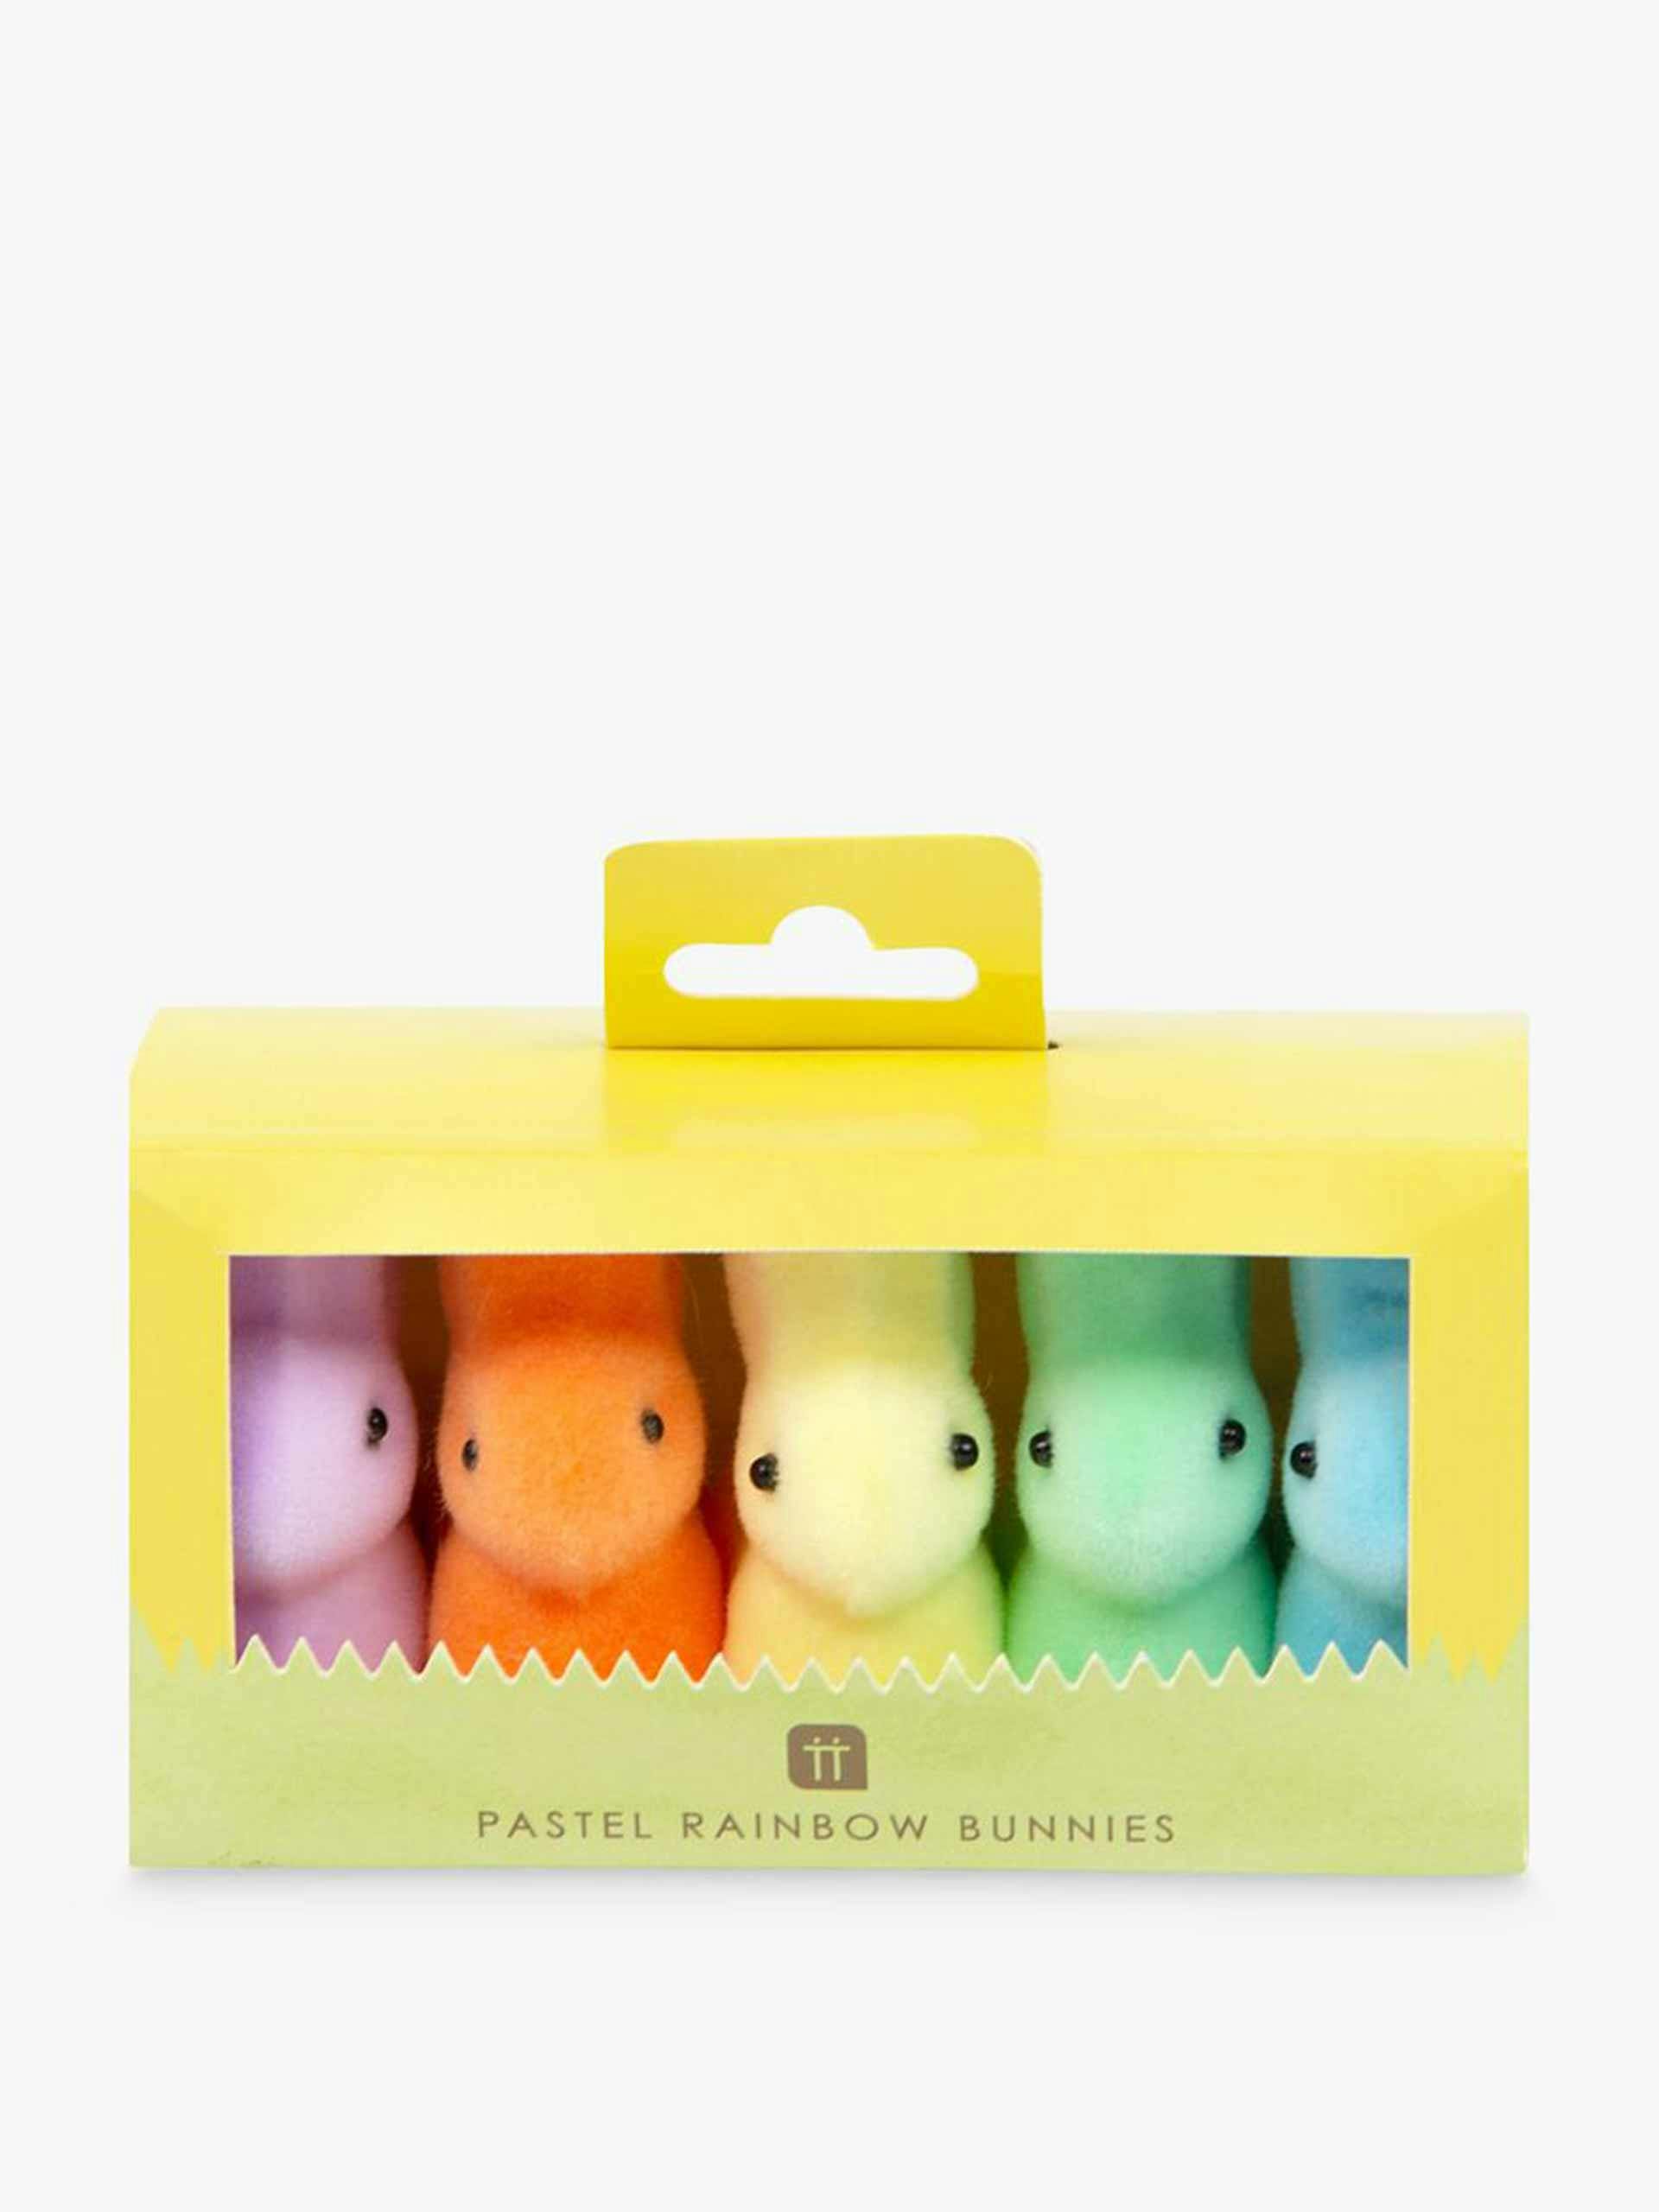 Rainbow bunny decorations